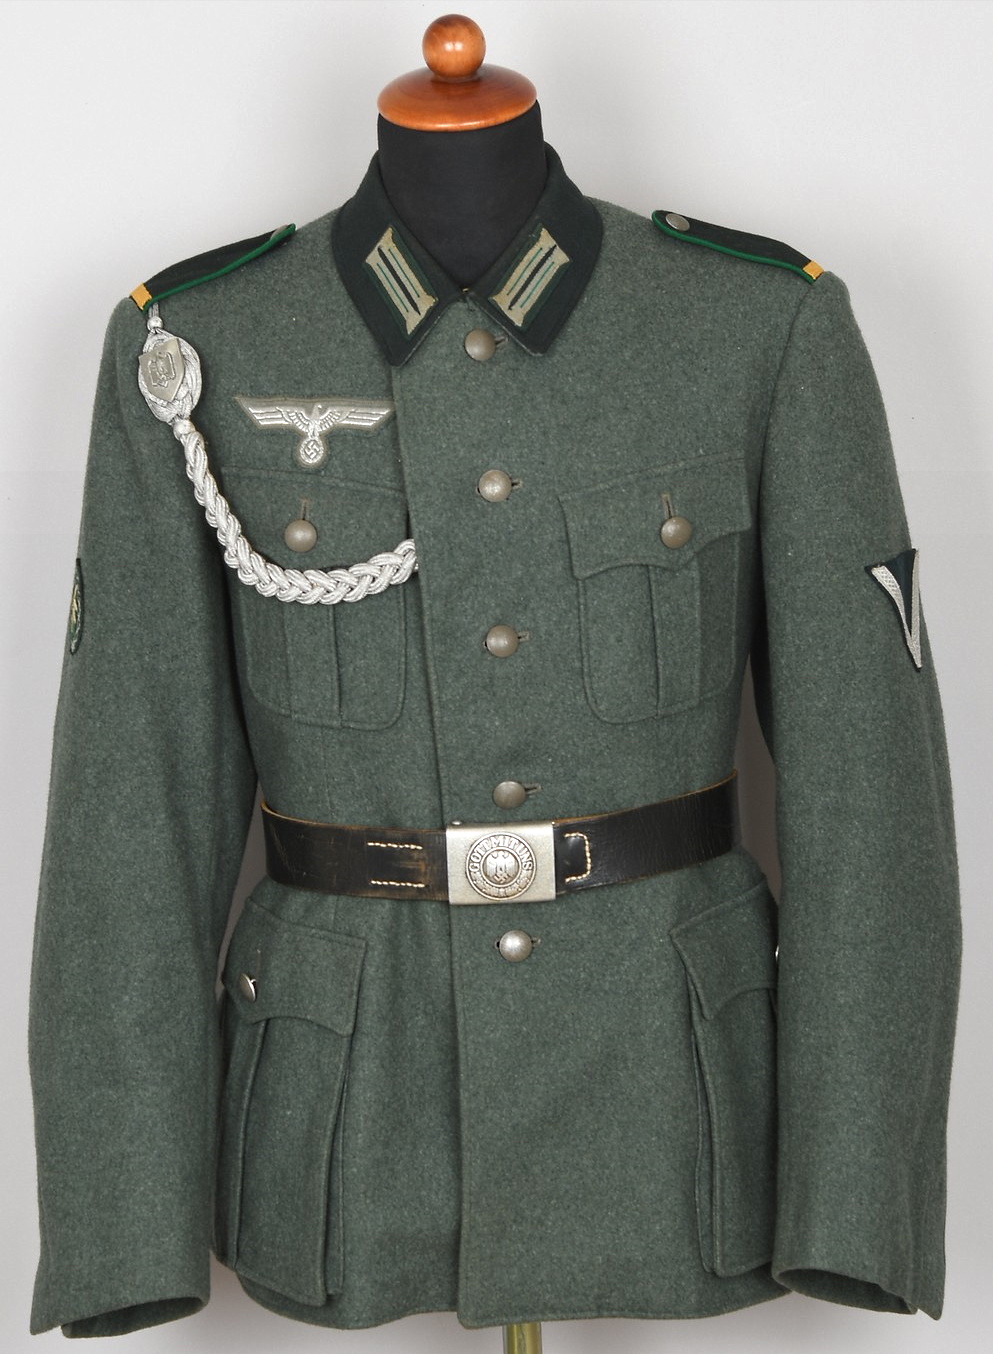 Heer Gebirgsjäger Gefreiter's Tailor Made M36 Tunic And Photoalb